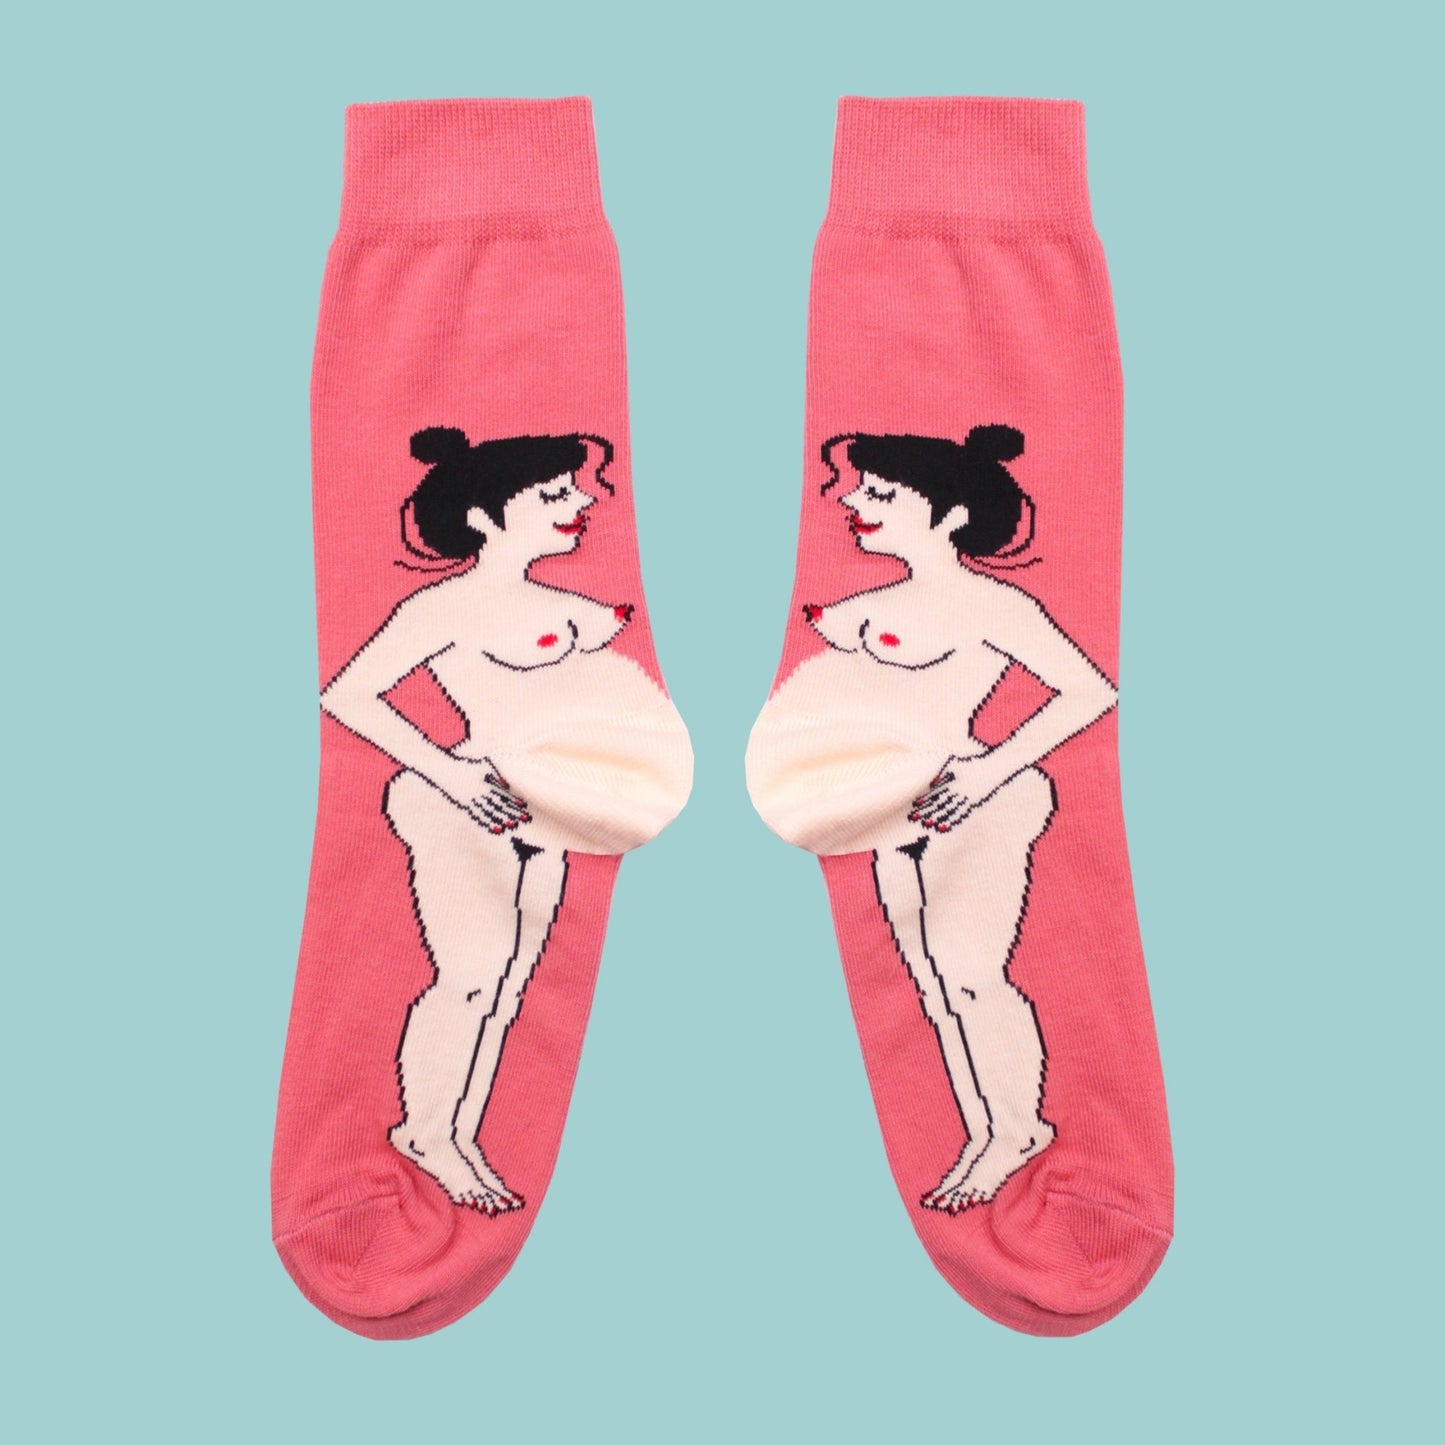 Pregnant Socks - White - Filurfifi